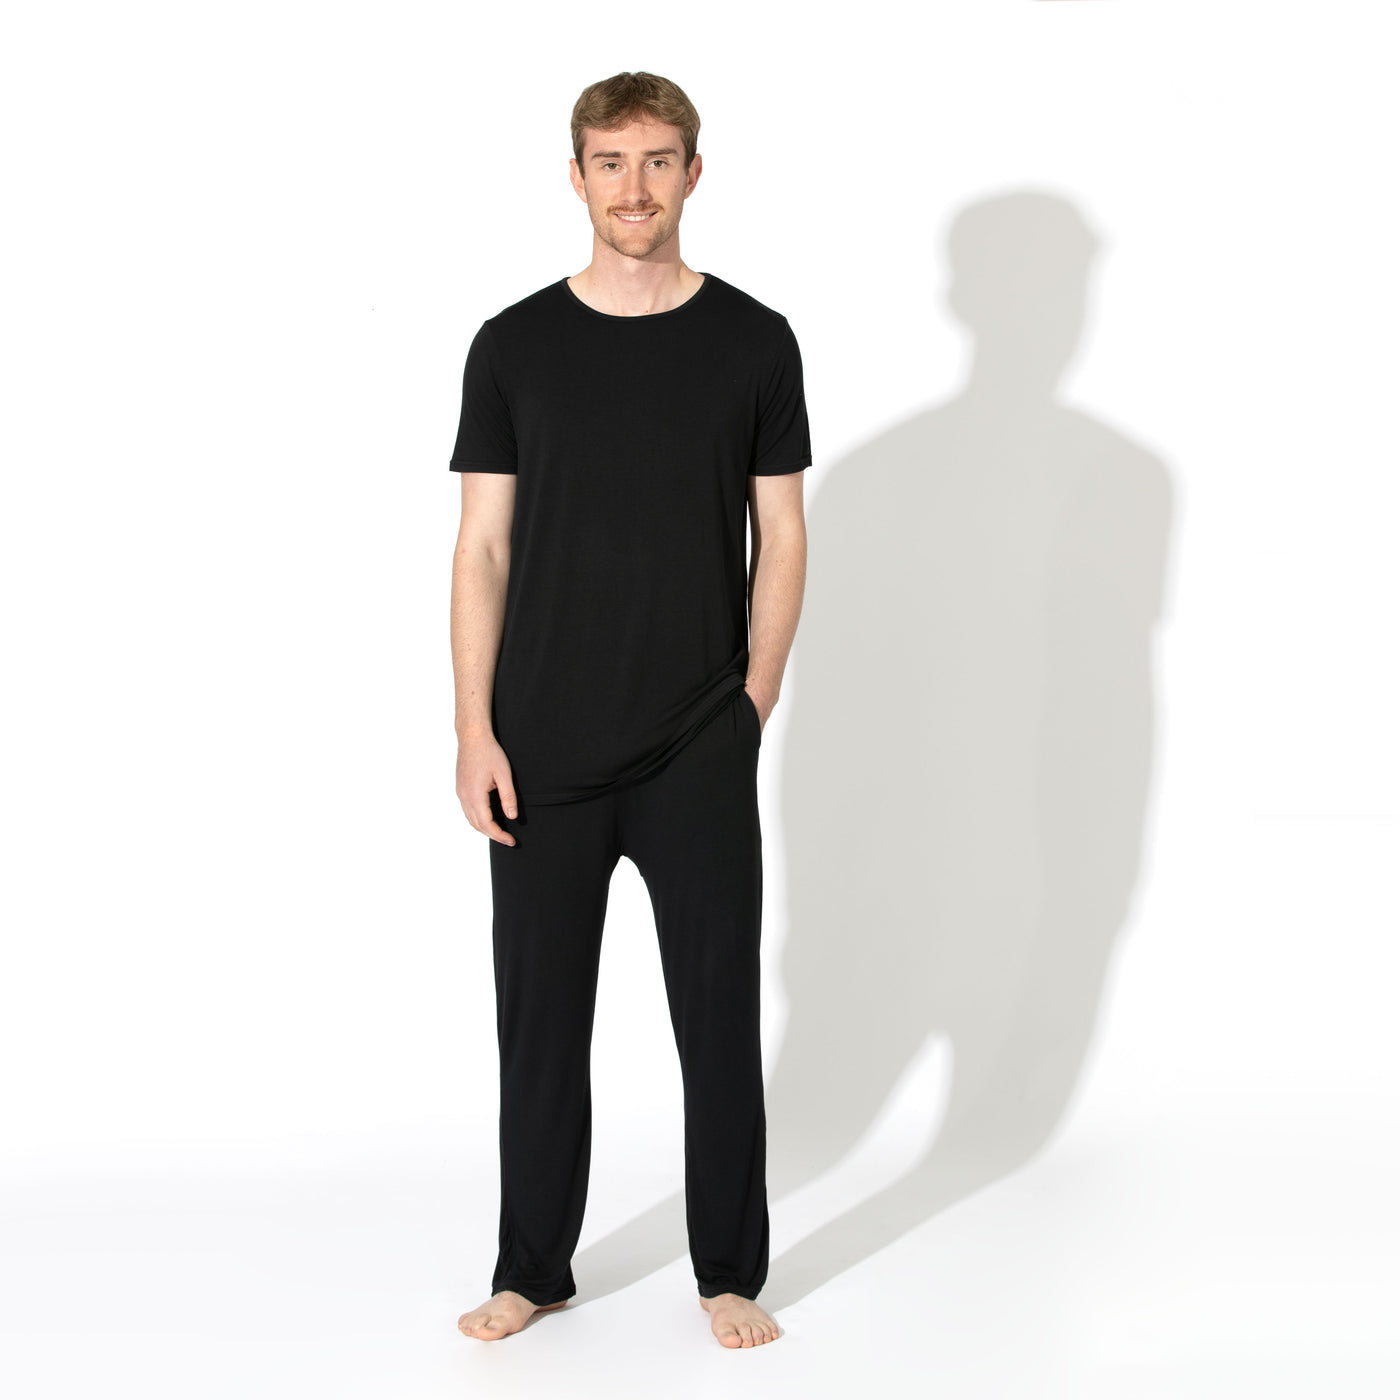 Obsidian Black Bamboo Men's Pajama Set